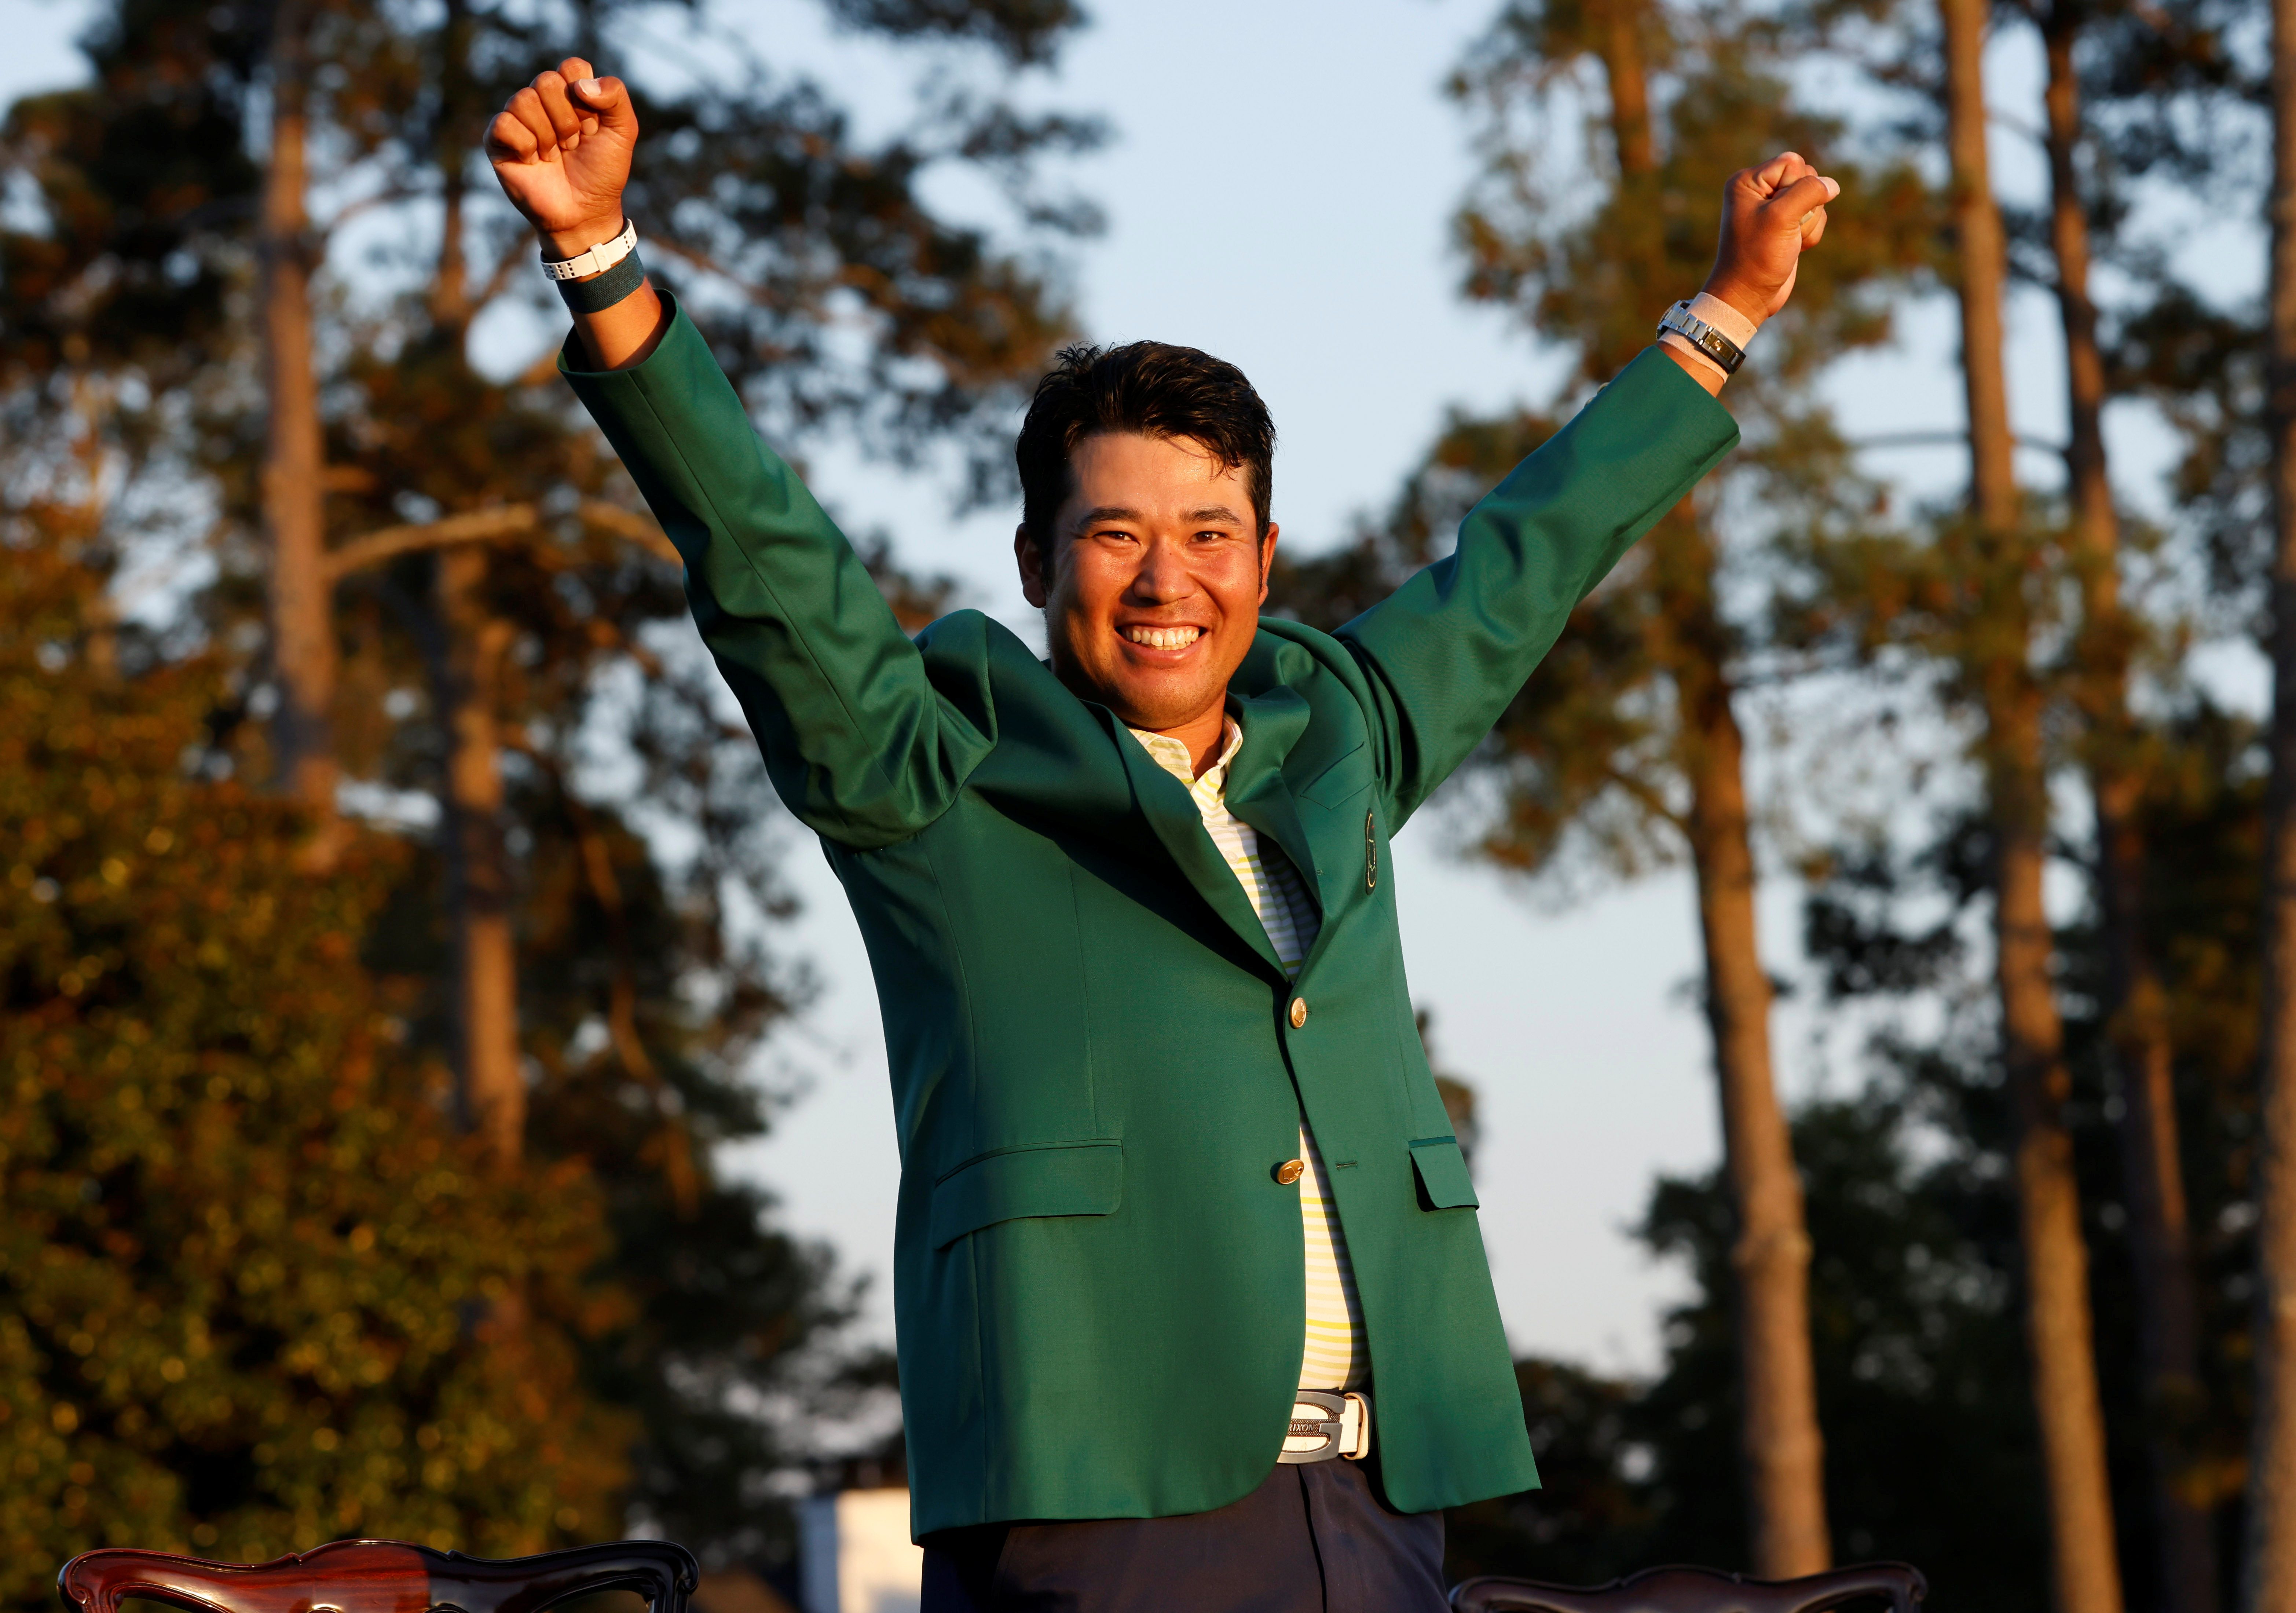 Japan’s Hideki Matsuyama hangs on to make history with Masters win